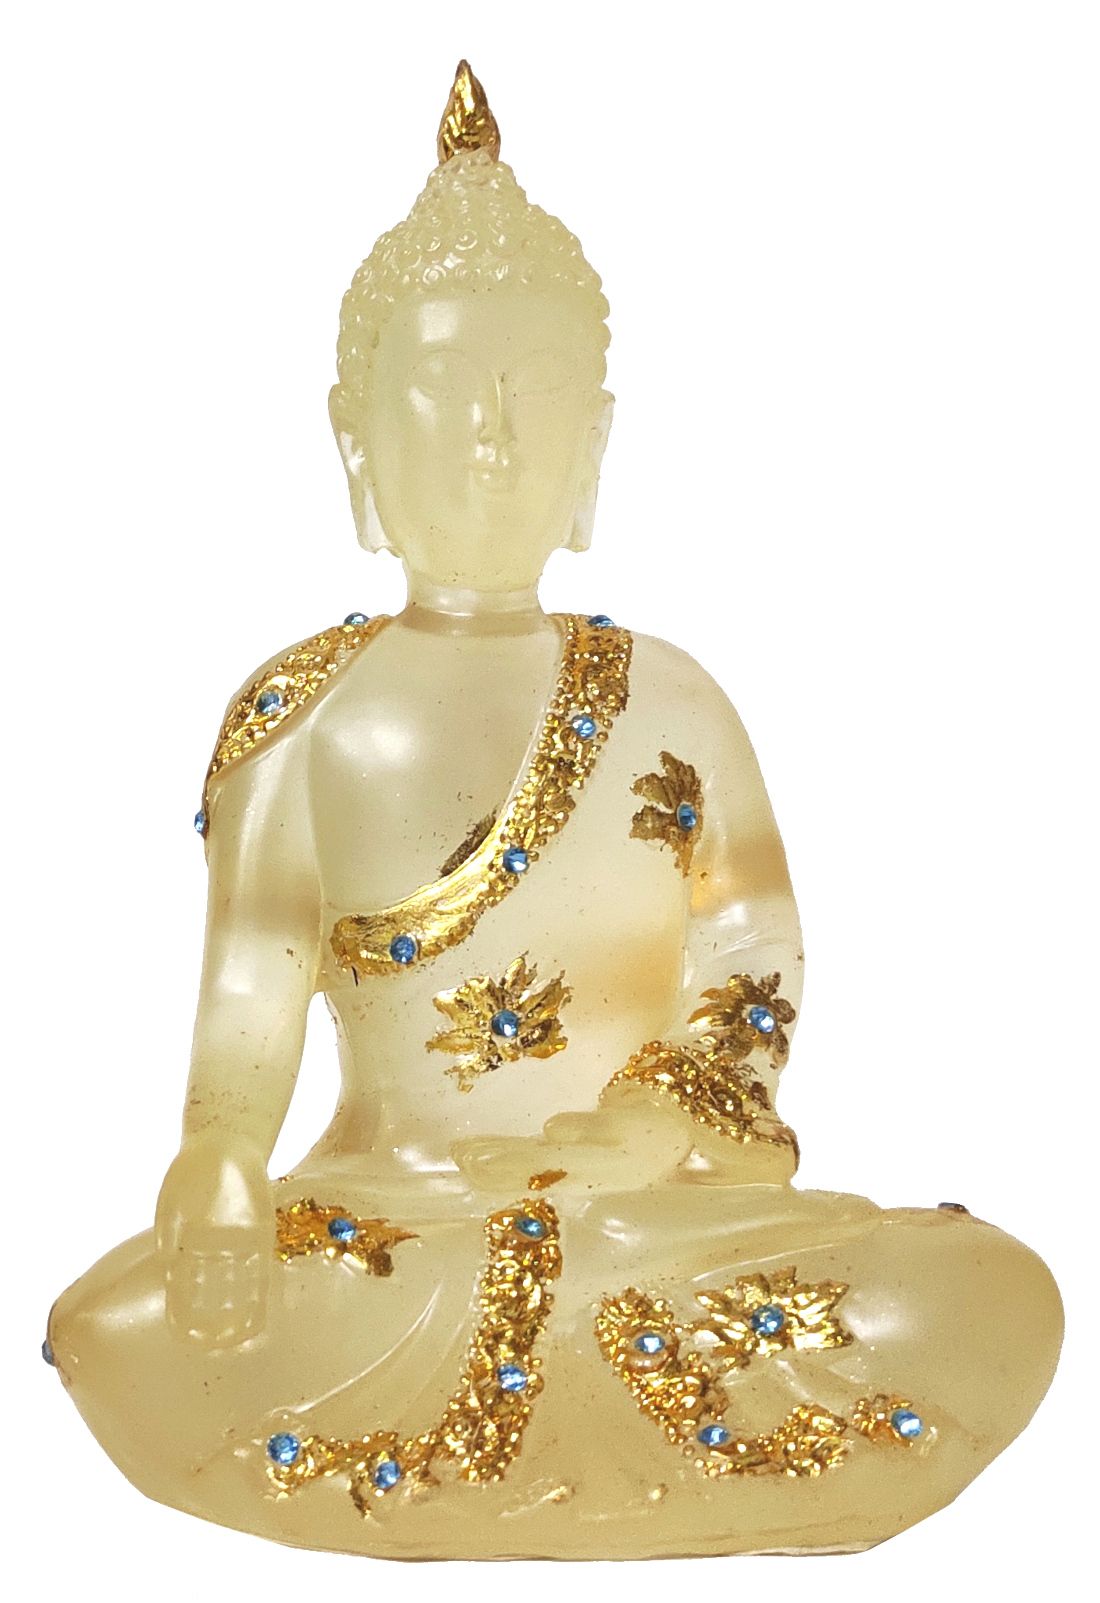 https://cdn.storehippo.com/s/553f8a18ebcbfa6819f79511/657abfb18f350fcf1de467bd/12718-resin-statue-buddha.jpg